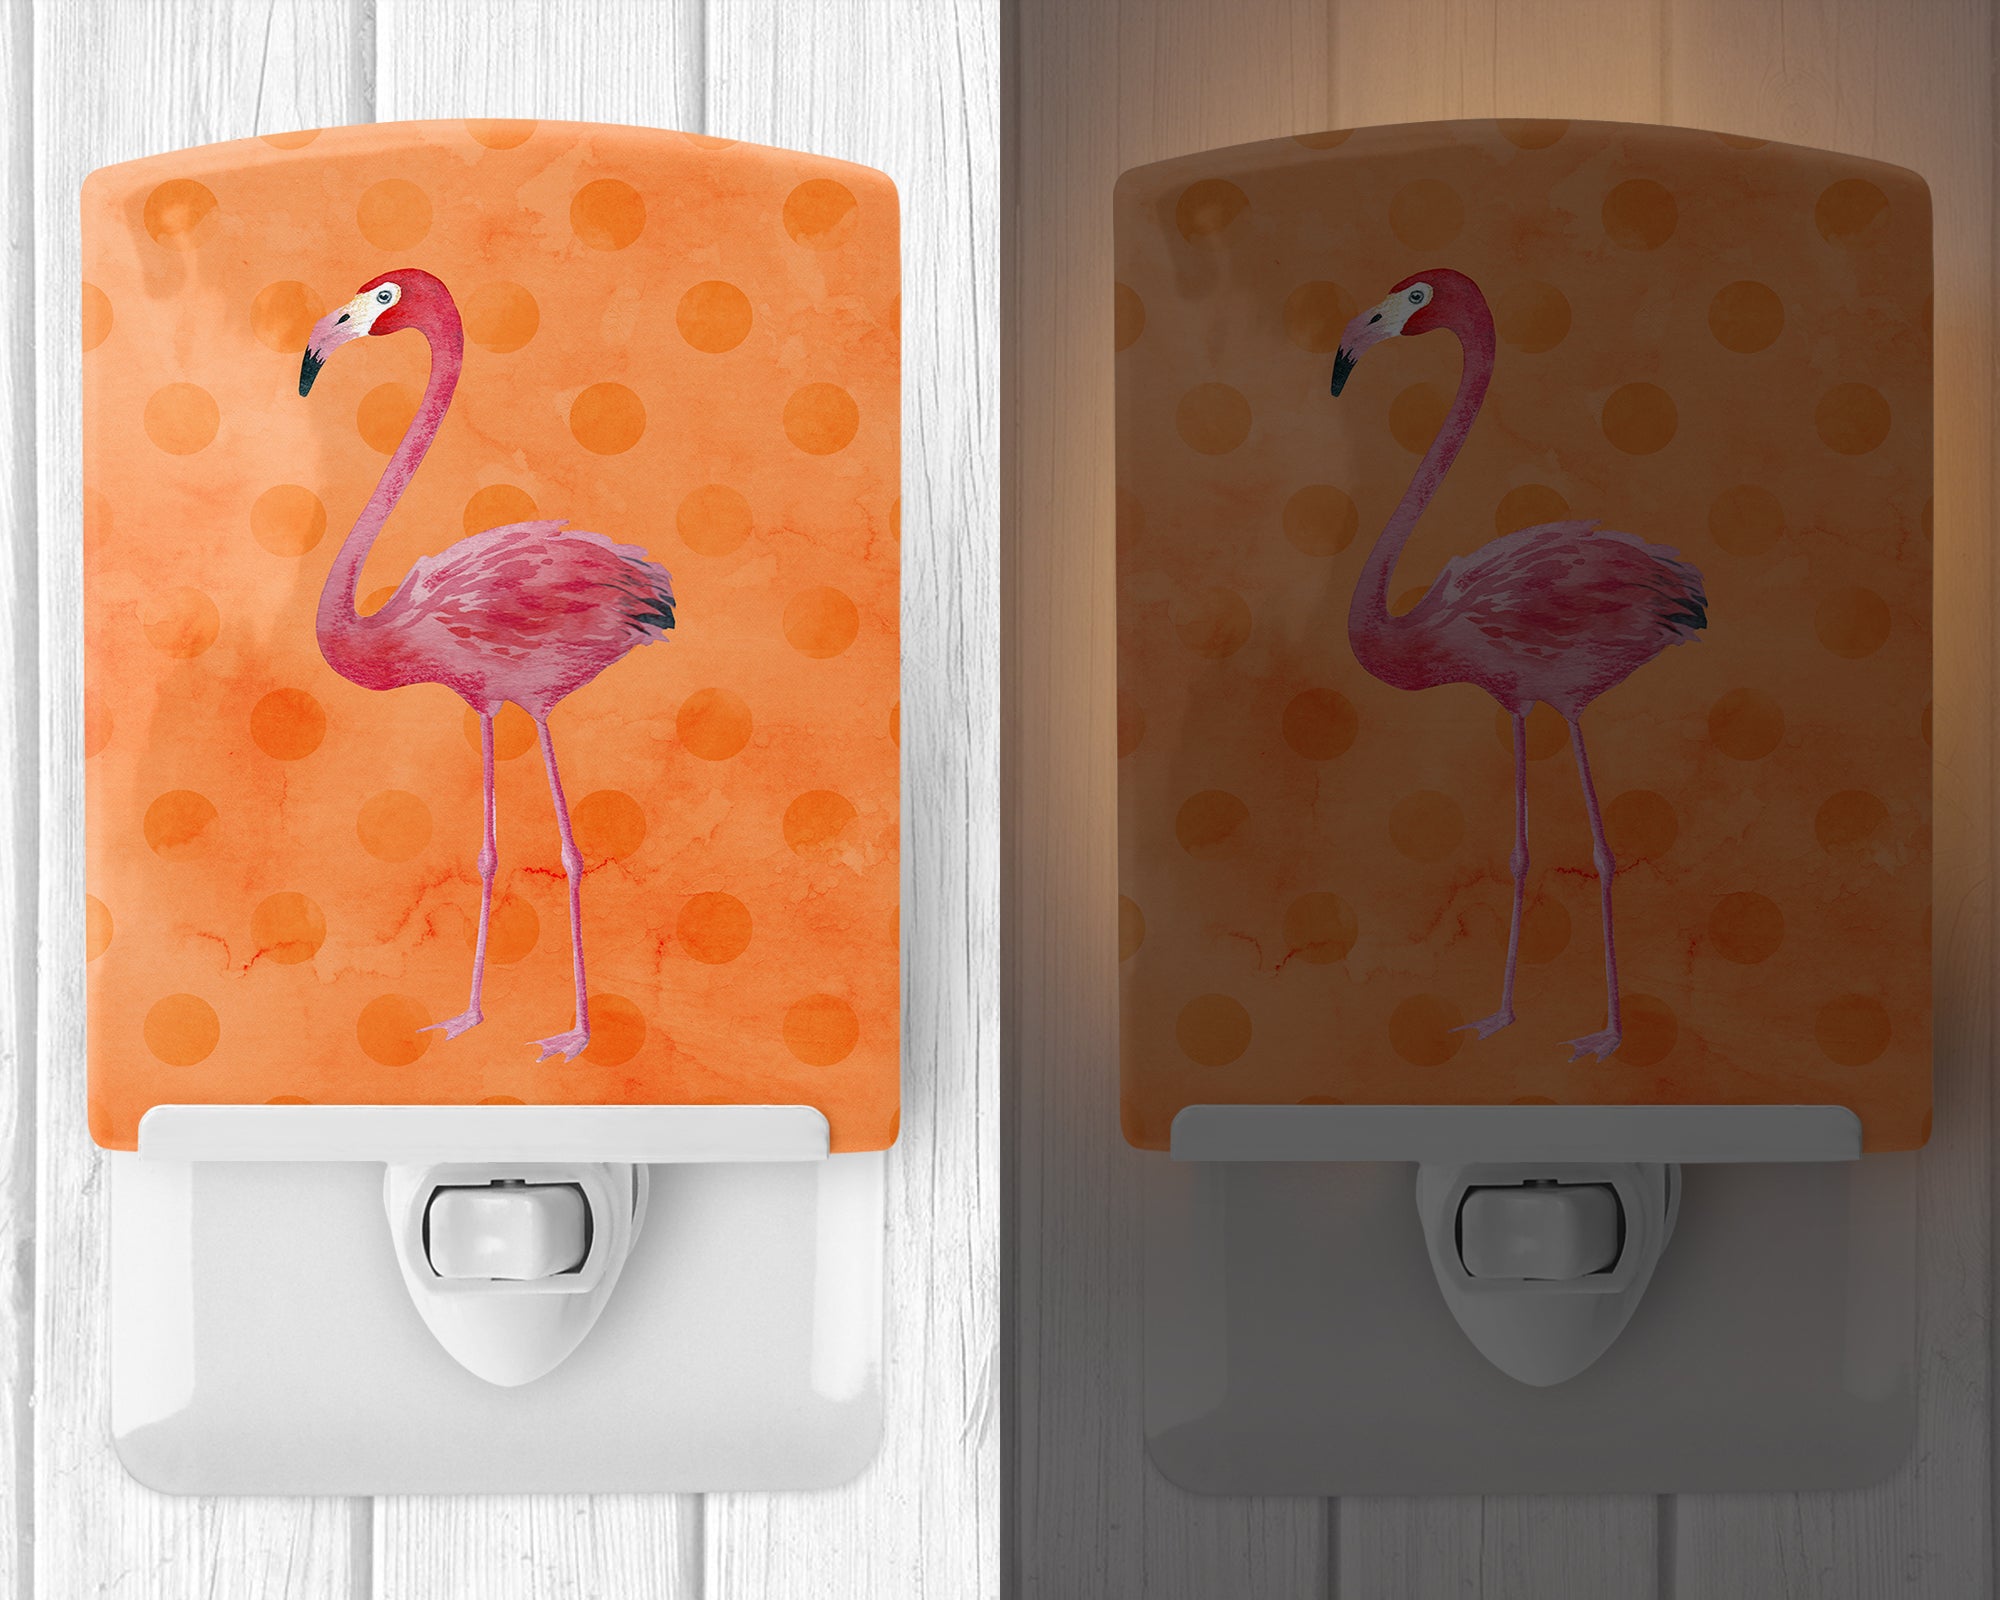 Flamingo Orange Polkadot Ceramic Night Light BB8188CNL - the-store.com